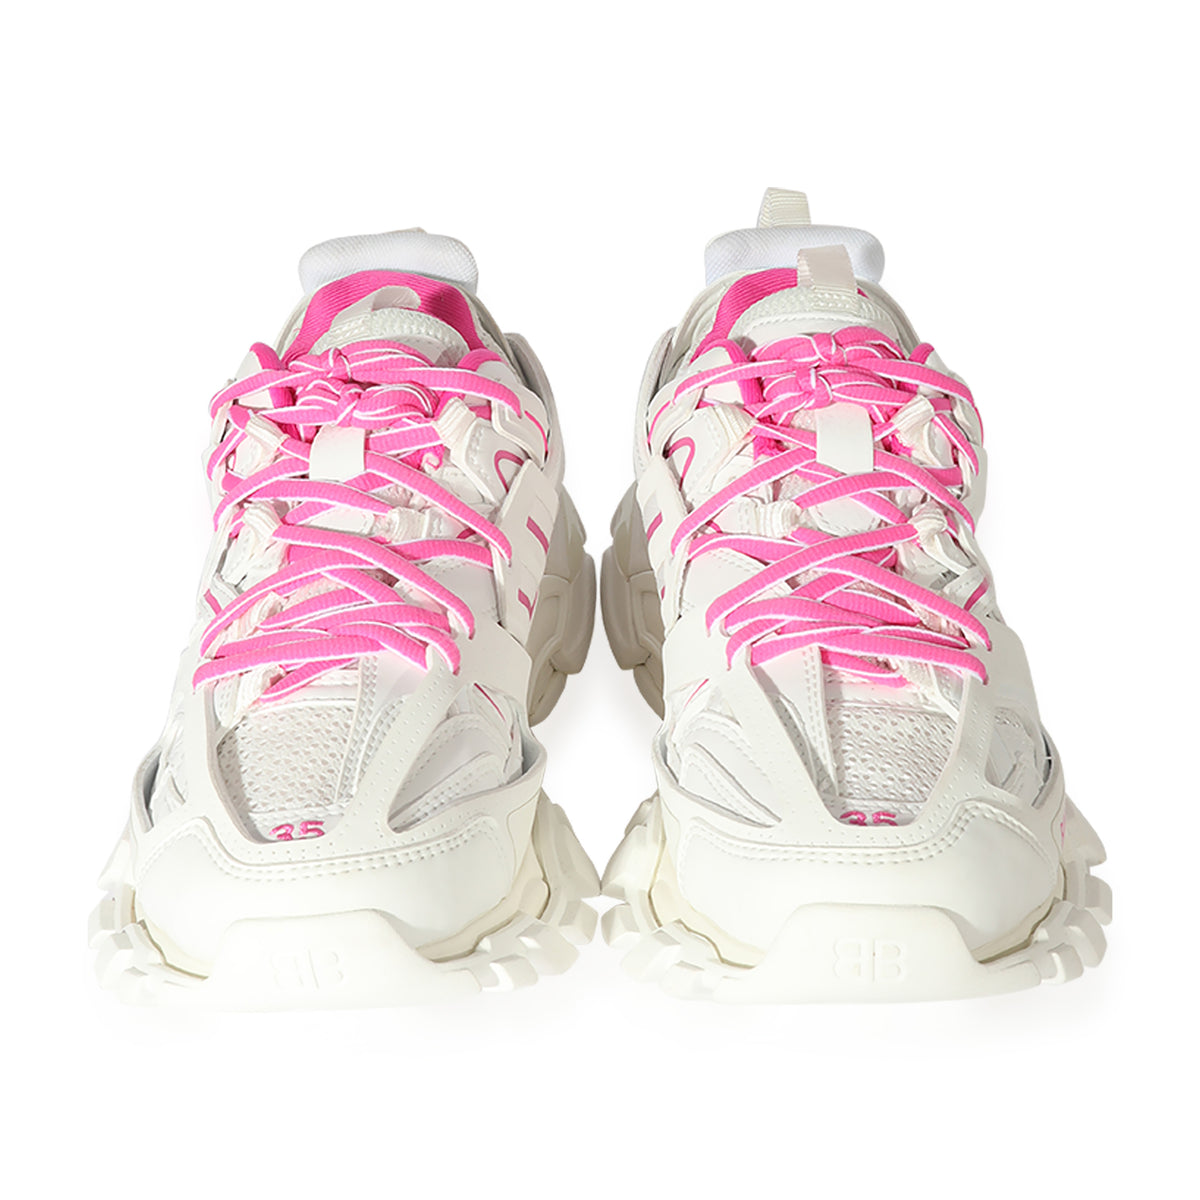 Balenciaga Wmns Track Sneaker 'White Fluo Pink'